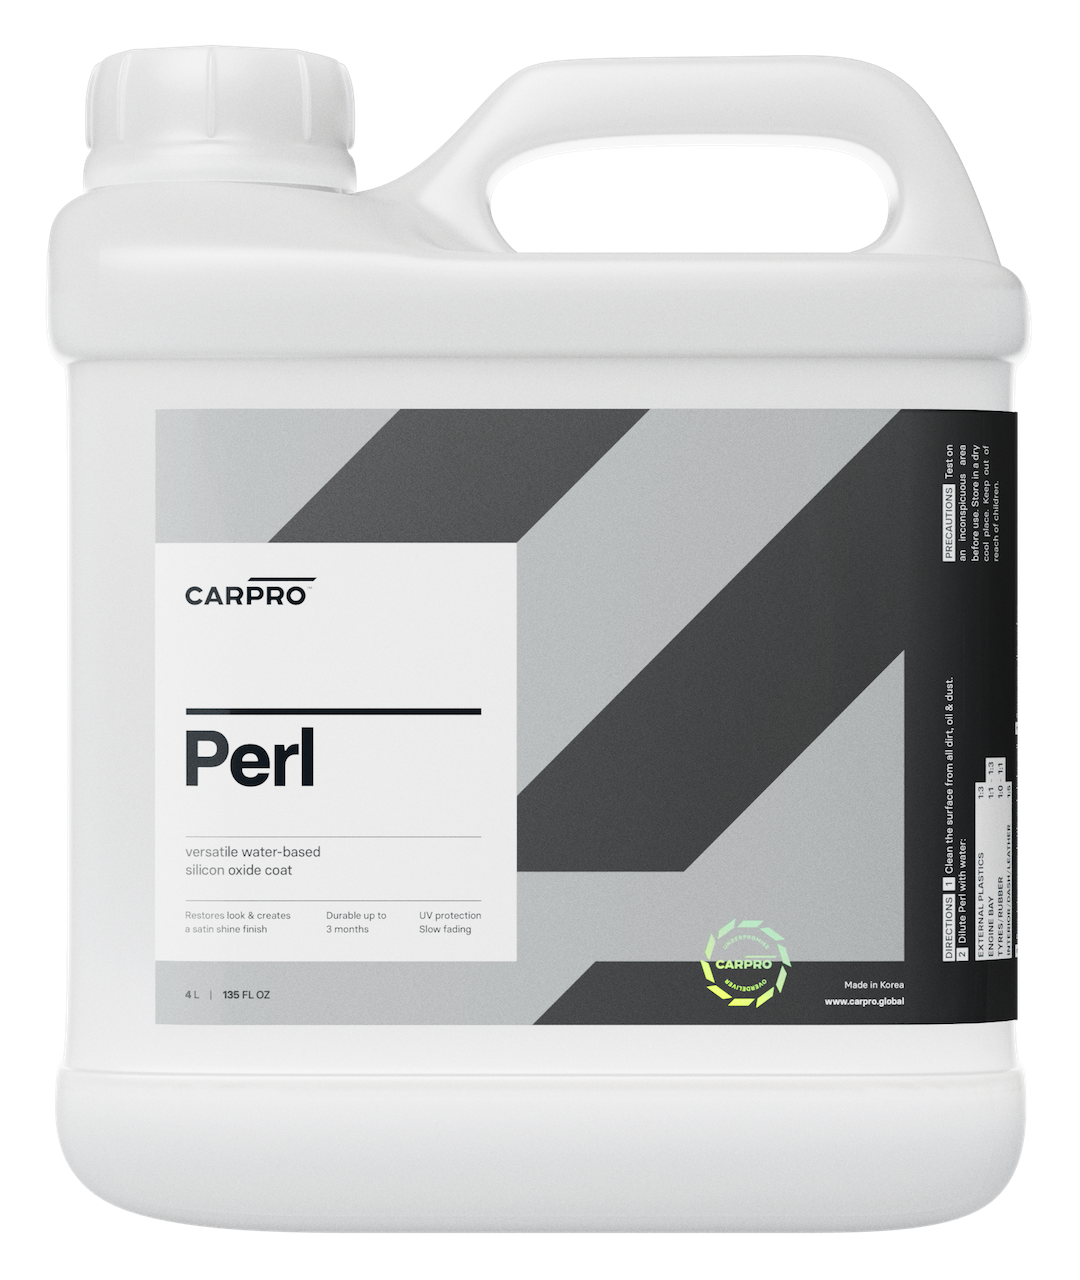 Carpro Perl - Best plastic rubber and vinyl dressing ? 